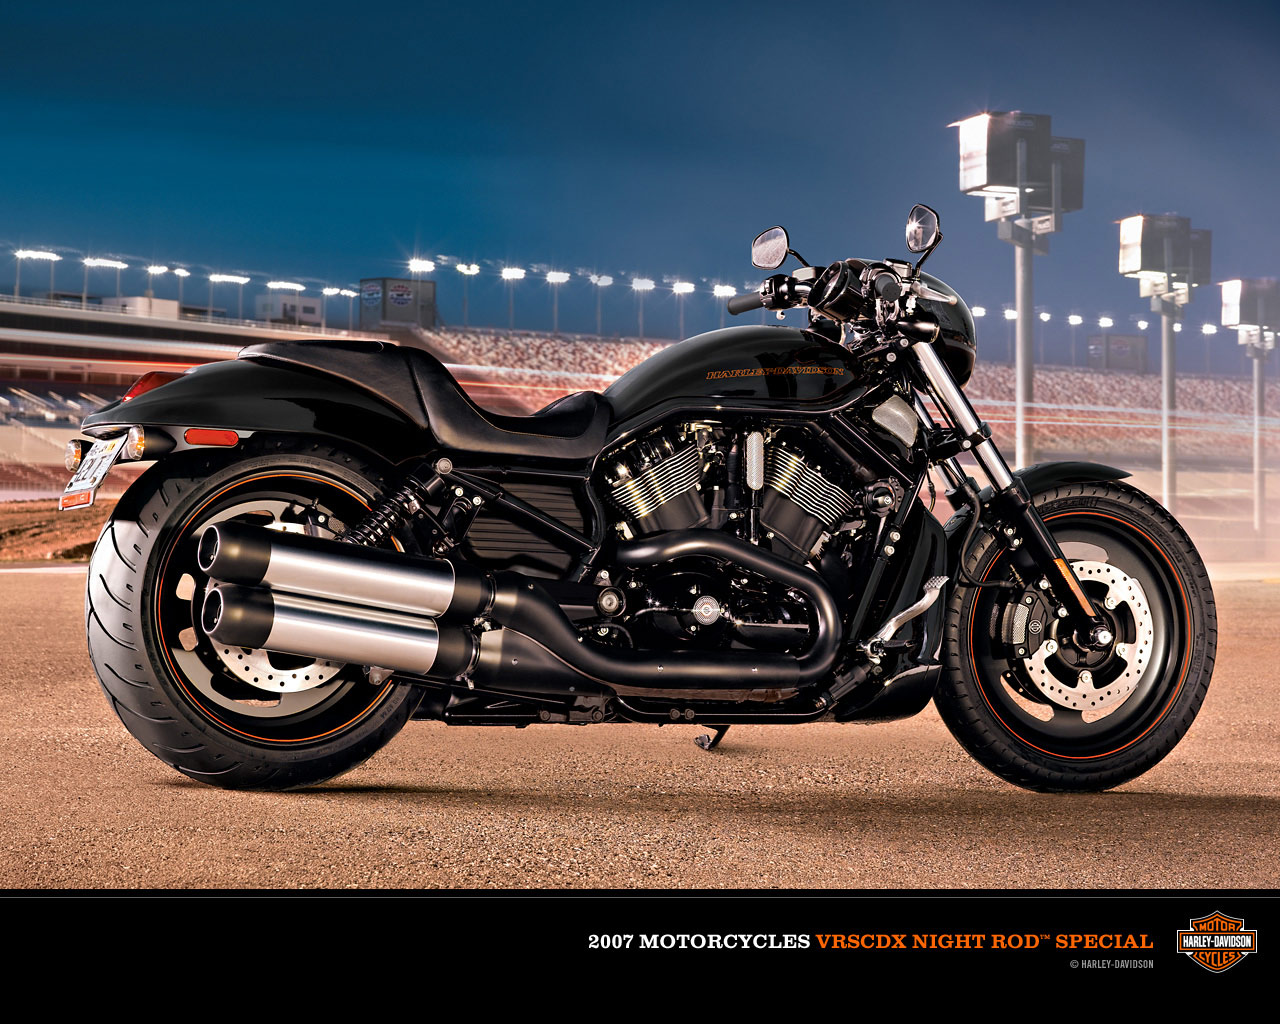 Harley Davidson Motorcycle Harley Davidson